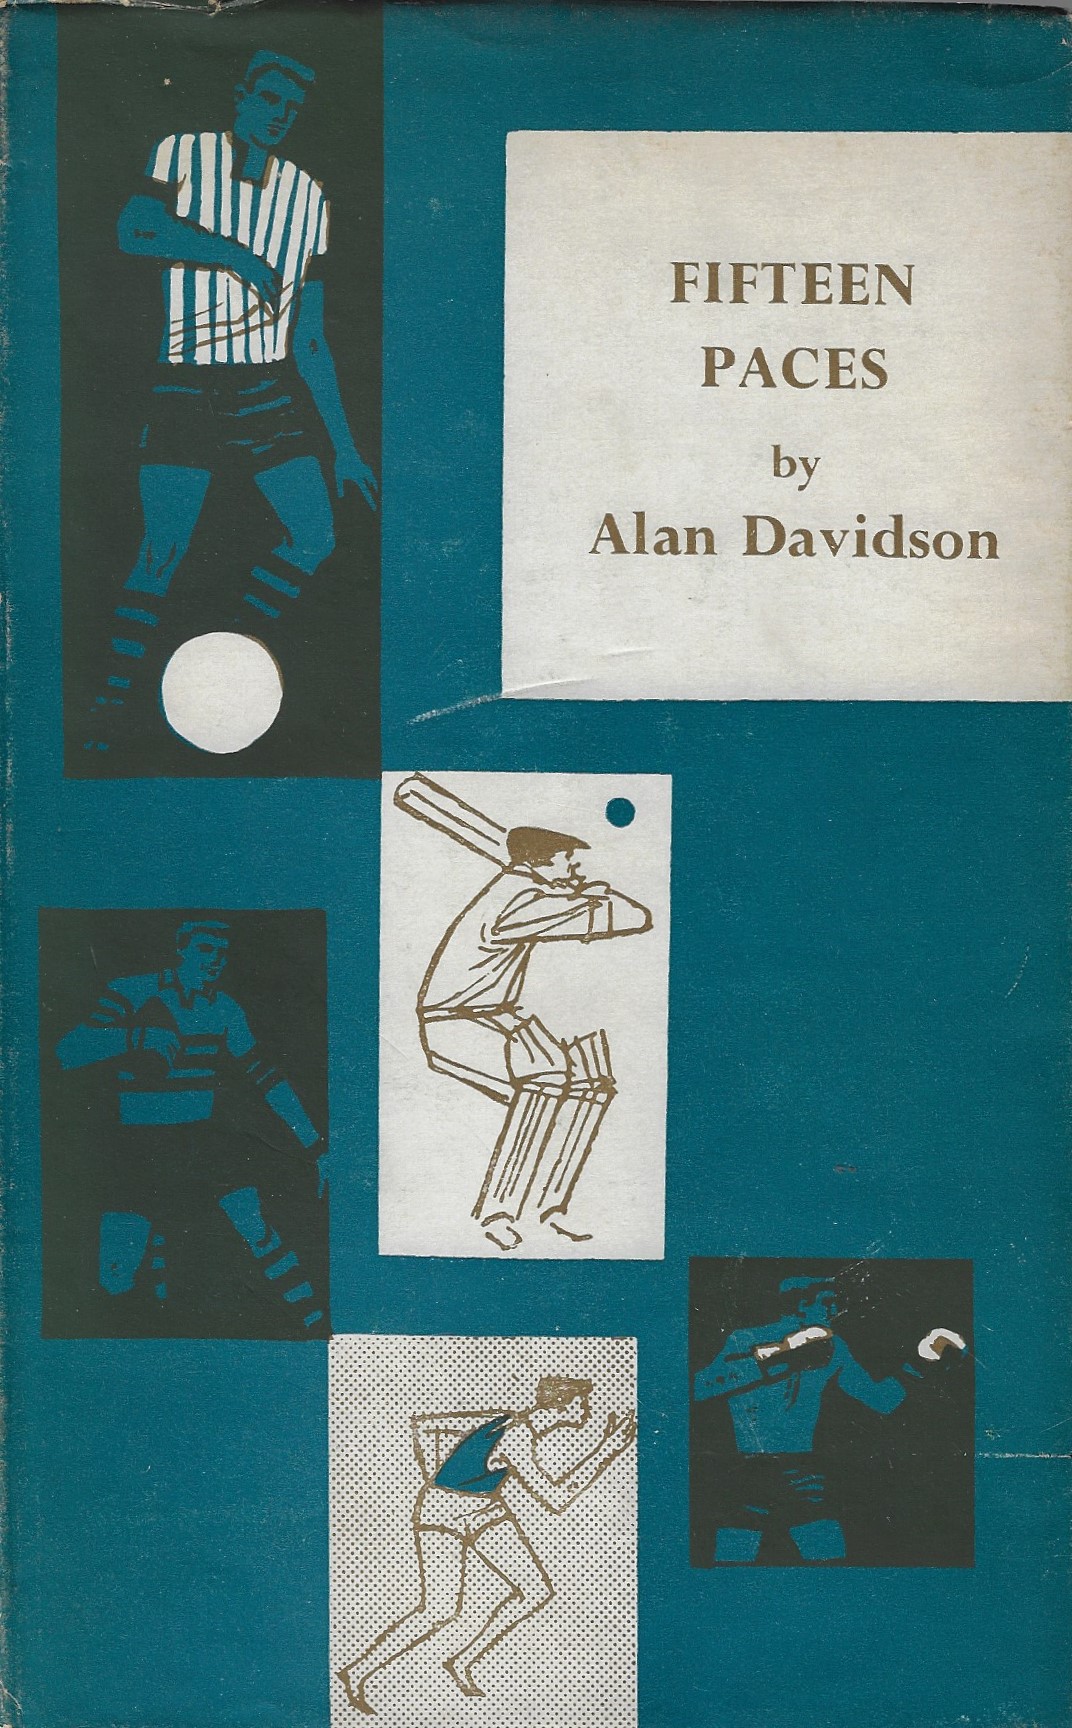 Davidson, Alan - Fifteen paces